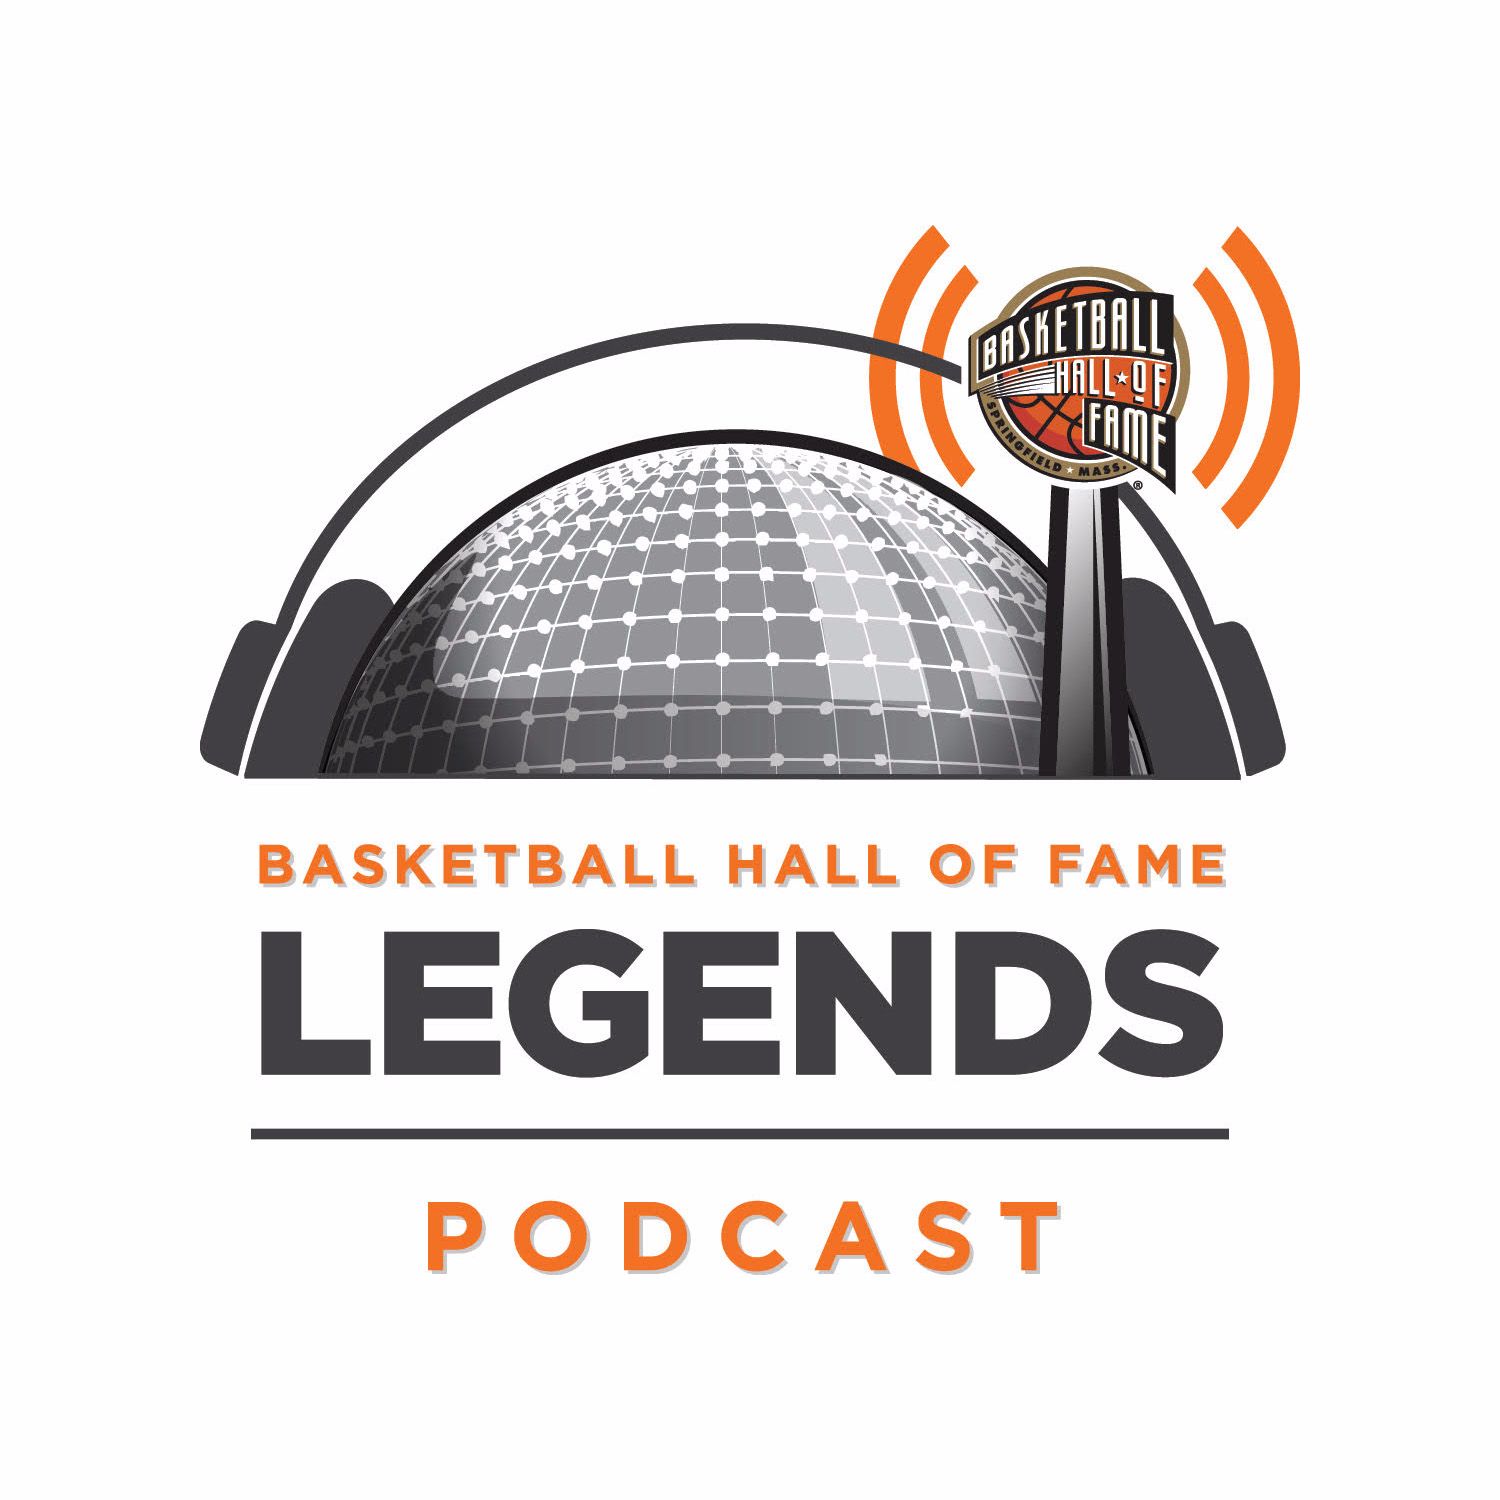 Legends Podcast Episode 48 - Bob McAdoo